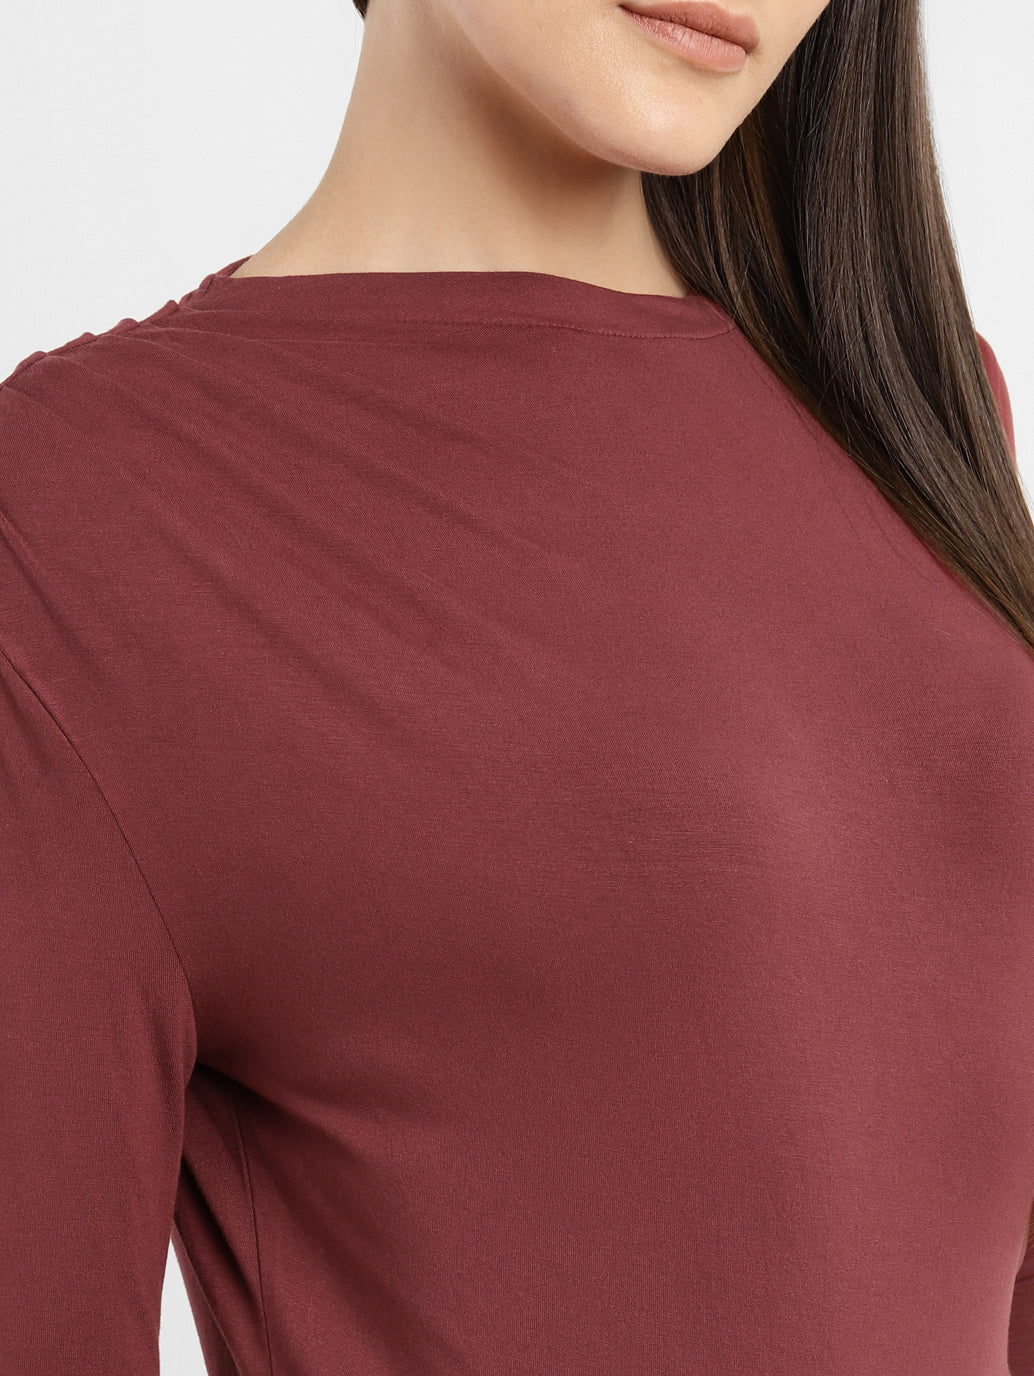 Women's Solid Asymmetrical Neck Top